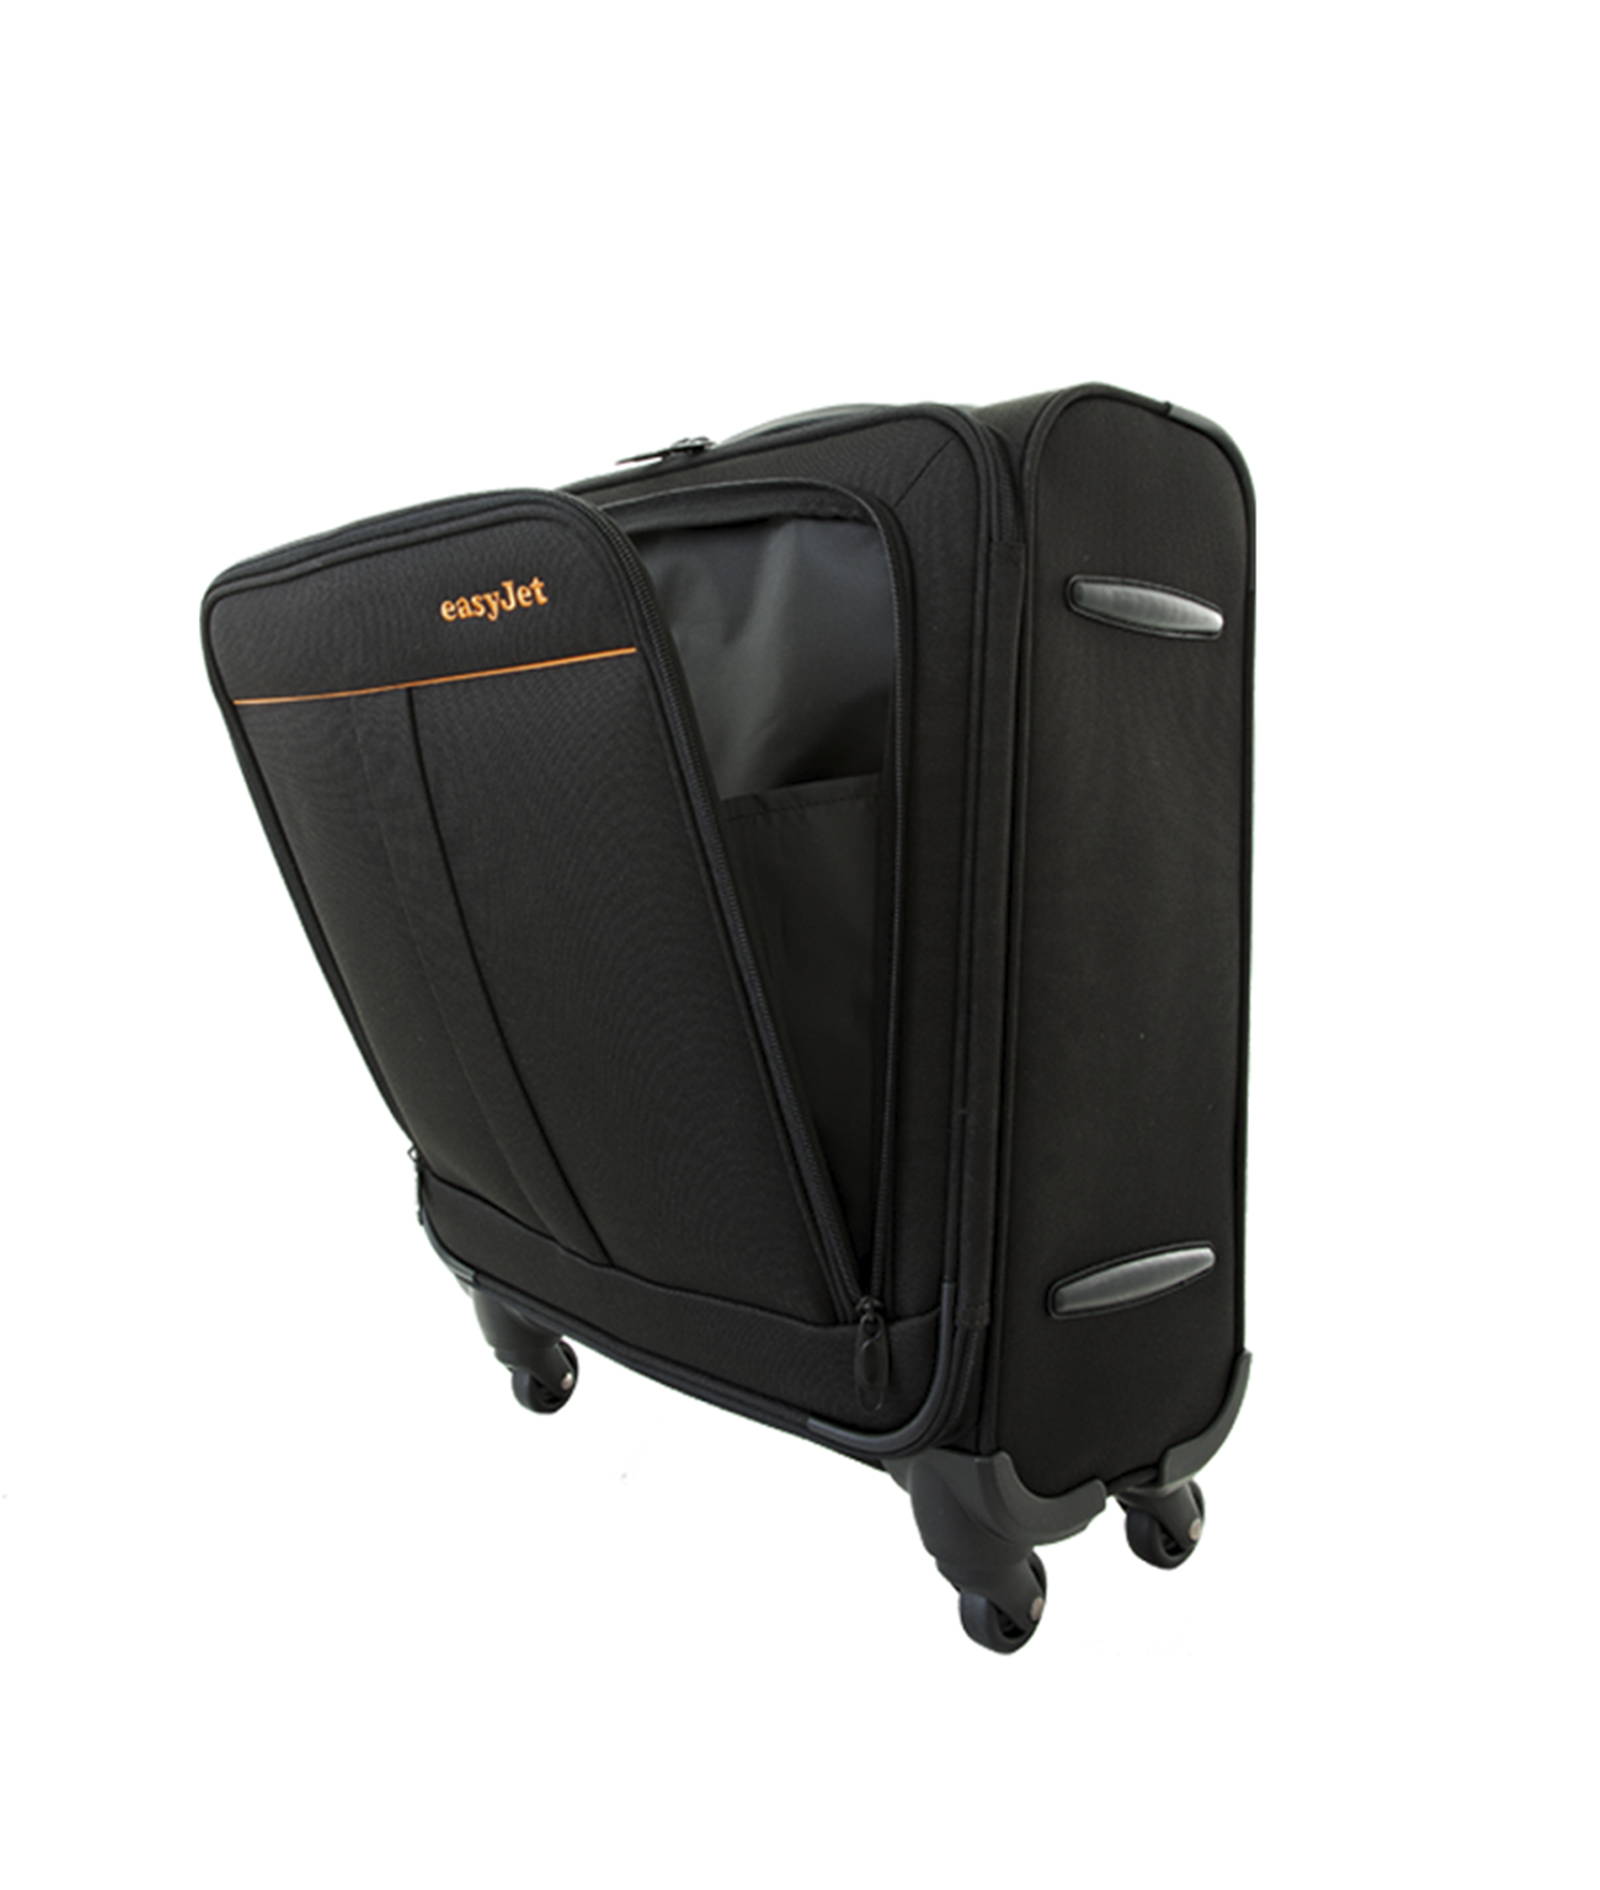 NEW COLORS ADDED! Triangle Widget Flight Crew Luggage Strap Designer Personalized Set Tassen & portemonnees Bagage & Reizen Bagageriemen 